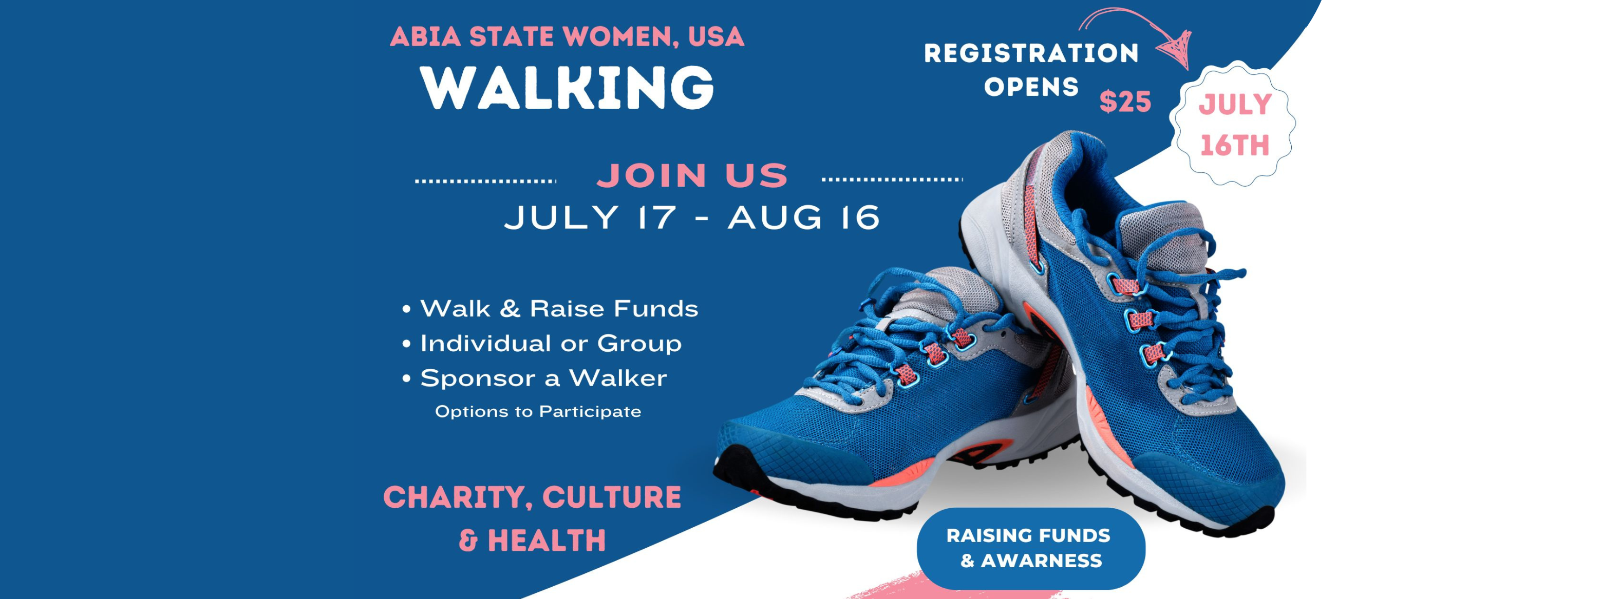 ASWA Walking for Charity, Culture & Health